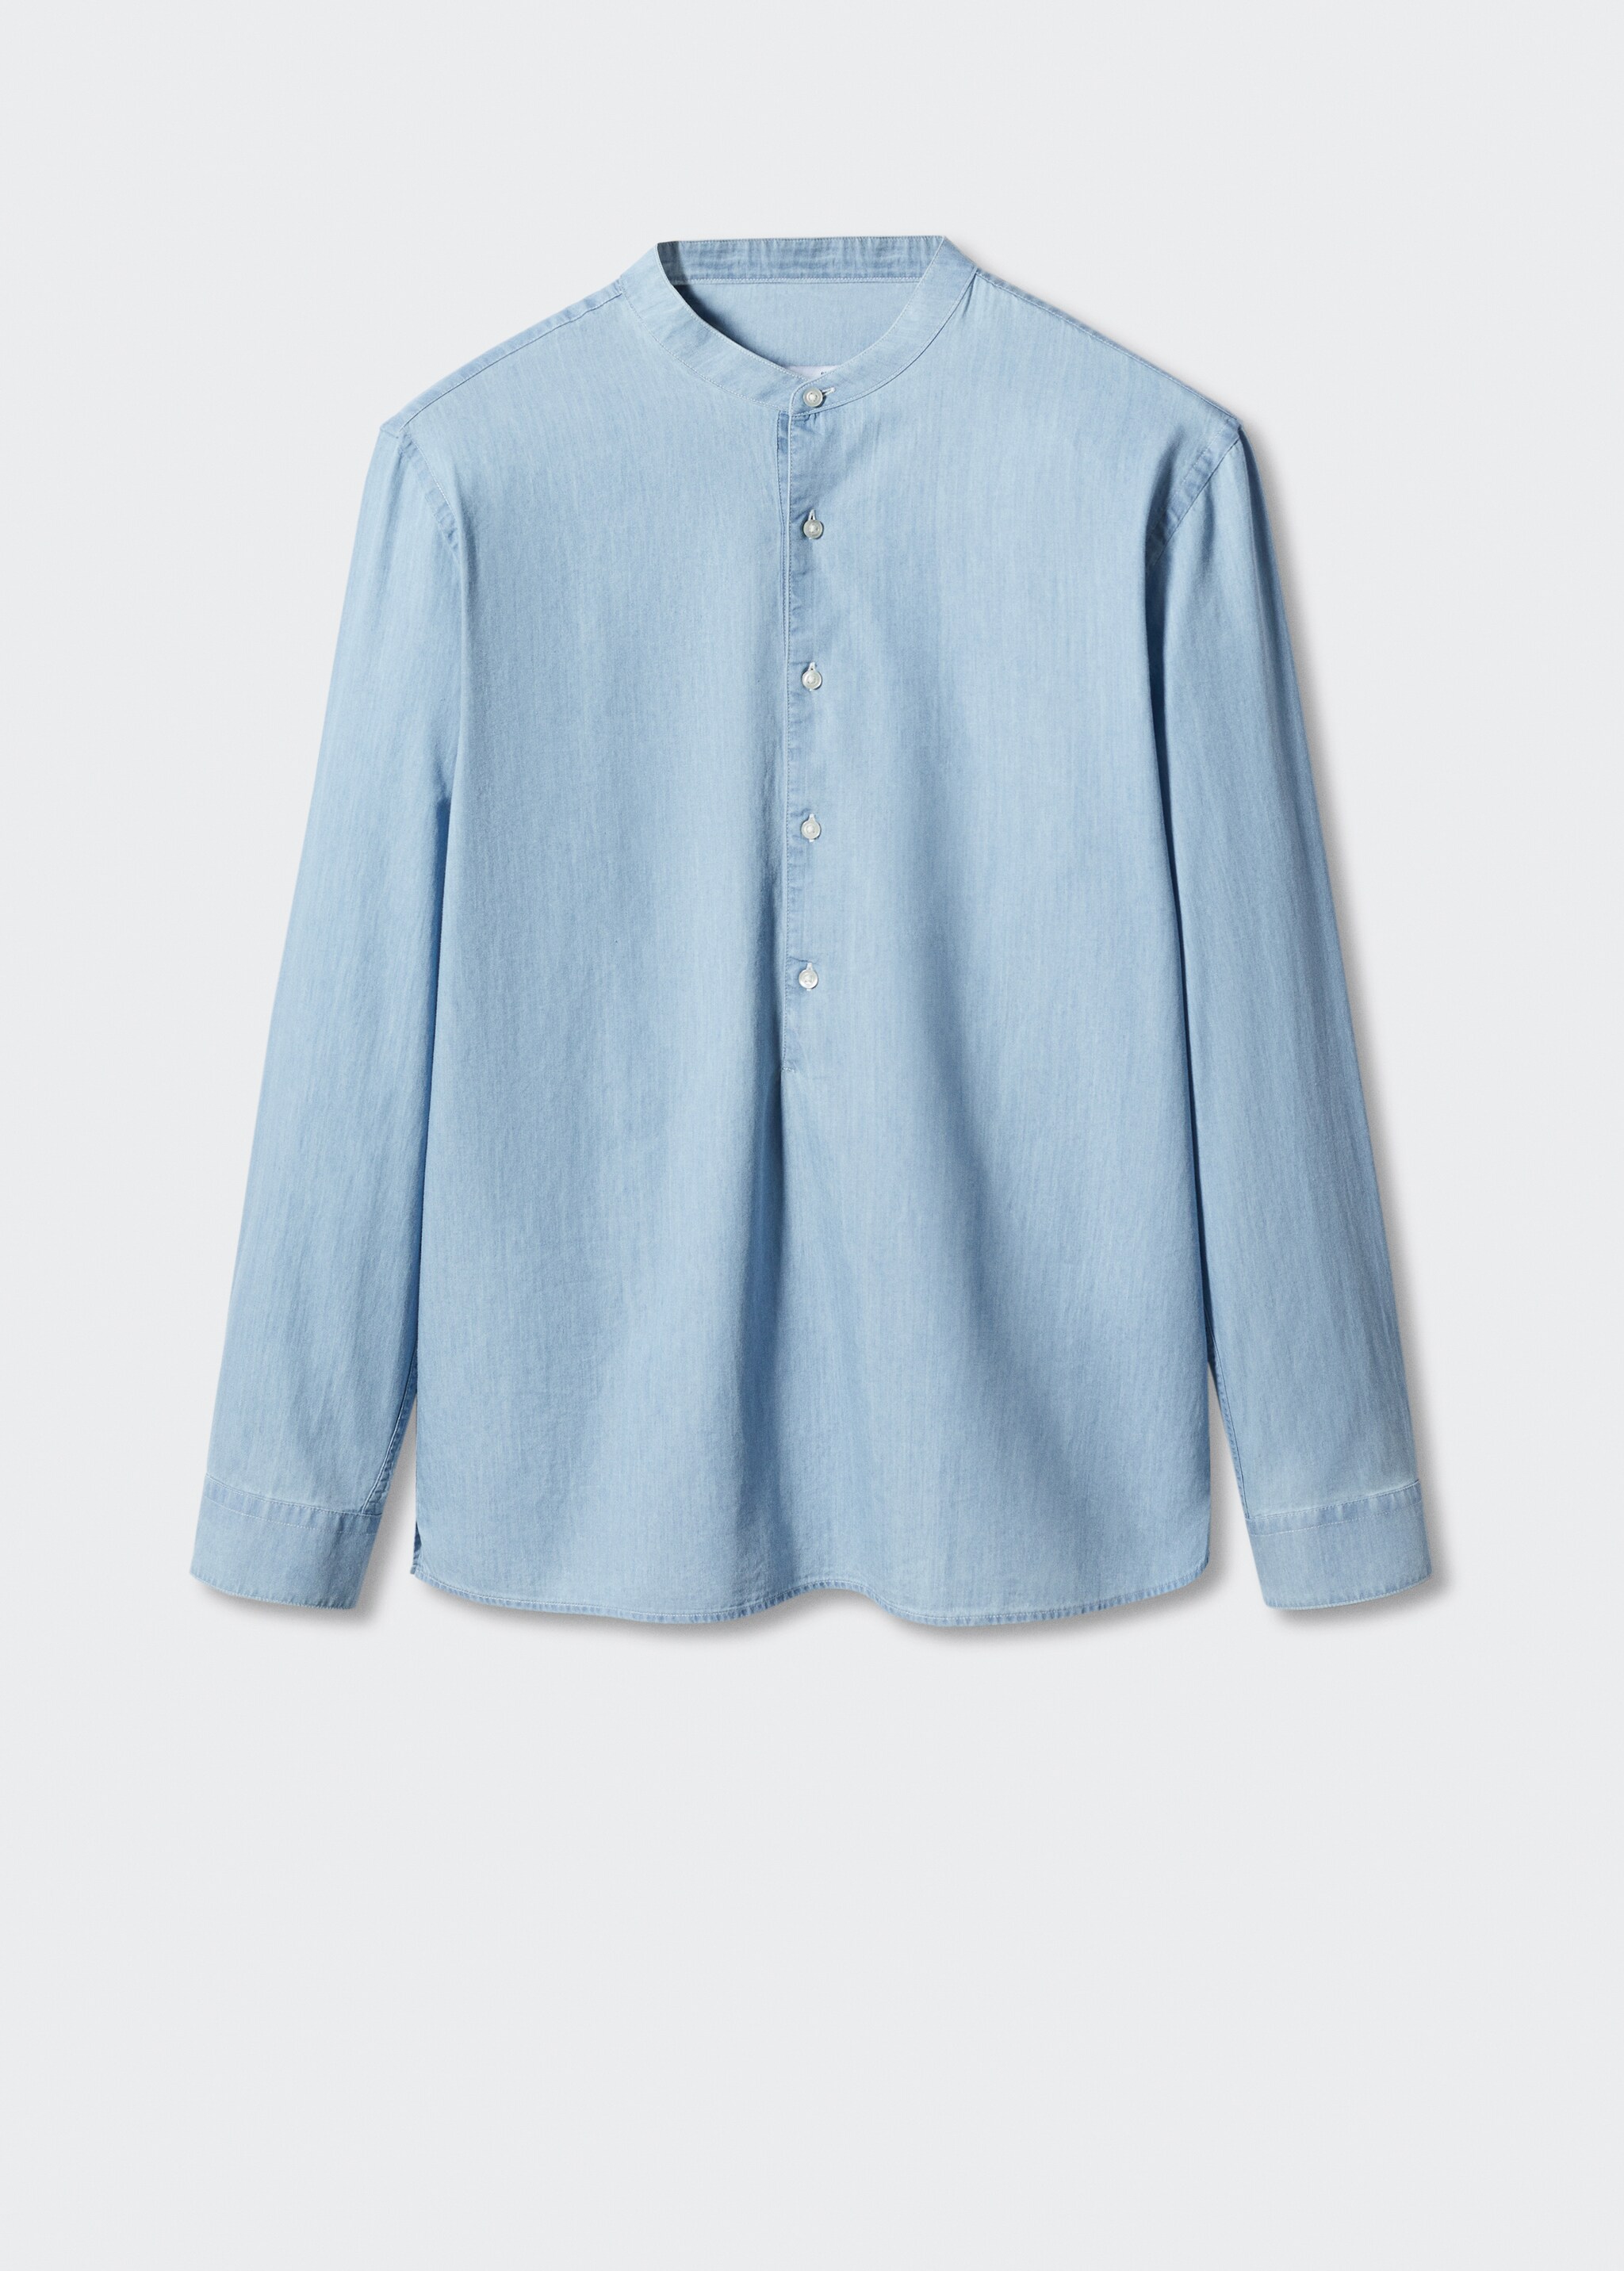 100% cotton mandarin collar shirt - Article without model